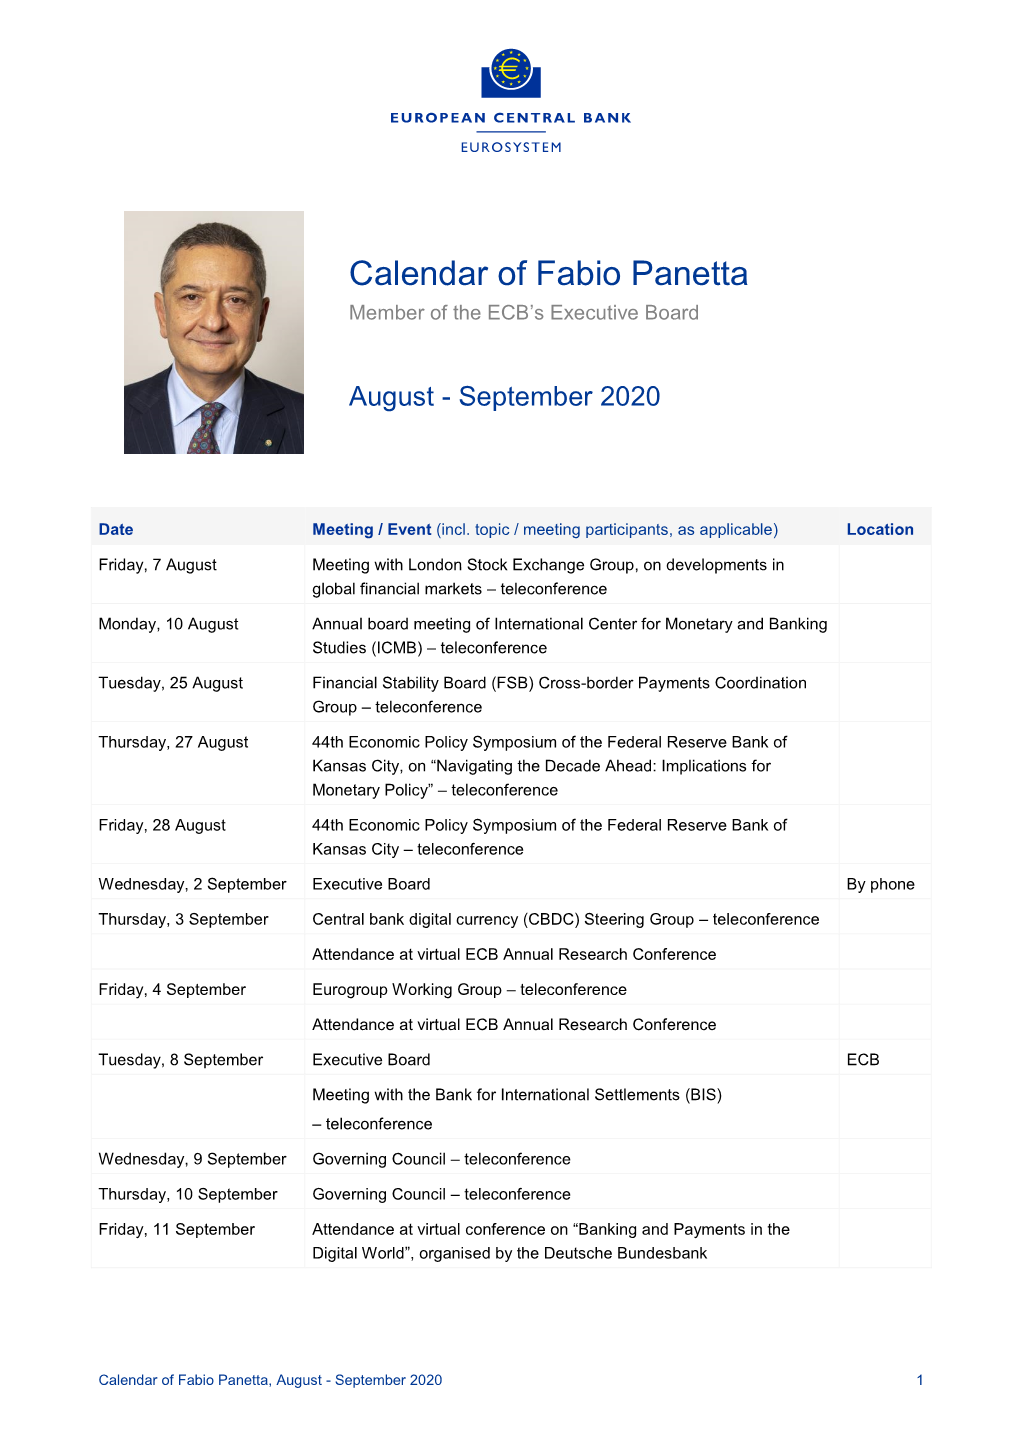 Calendar of Fabio Panetta, August - September 2020 1 Tuesday, 15 September Executive Board ECB